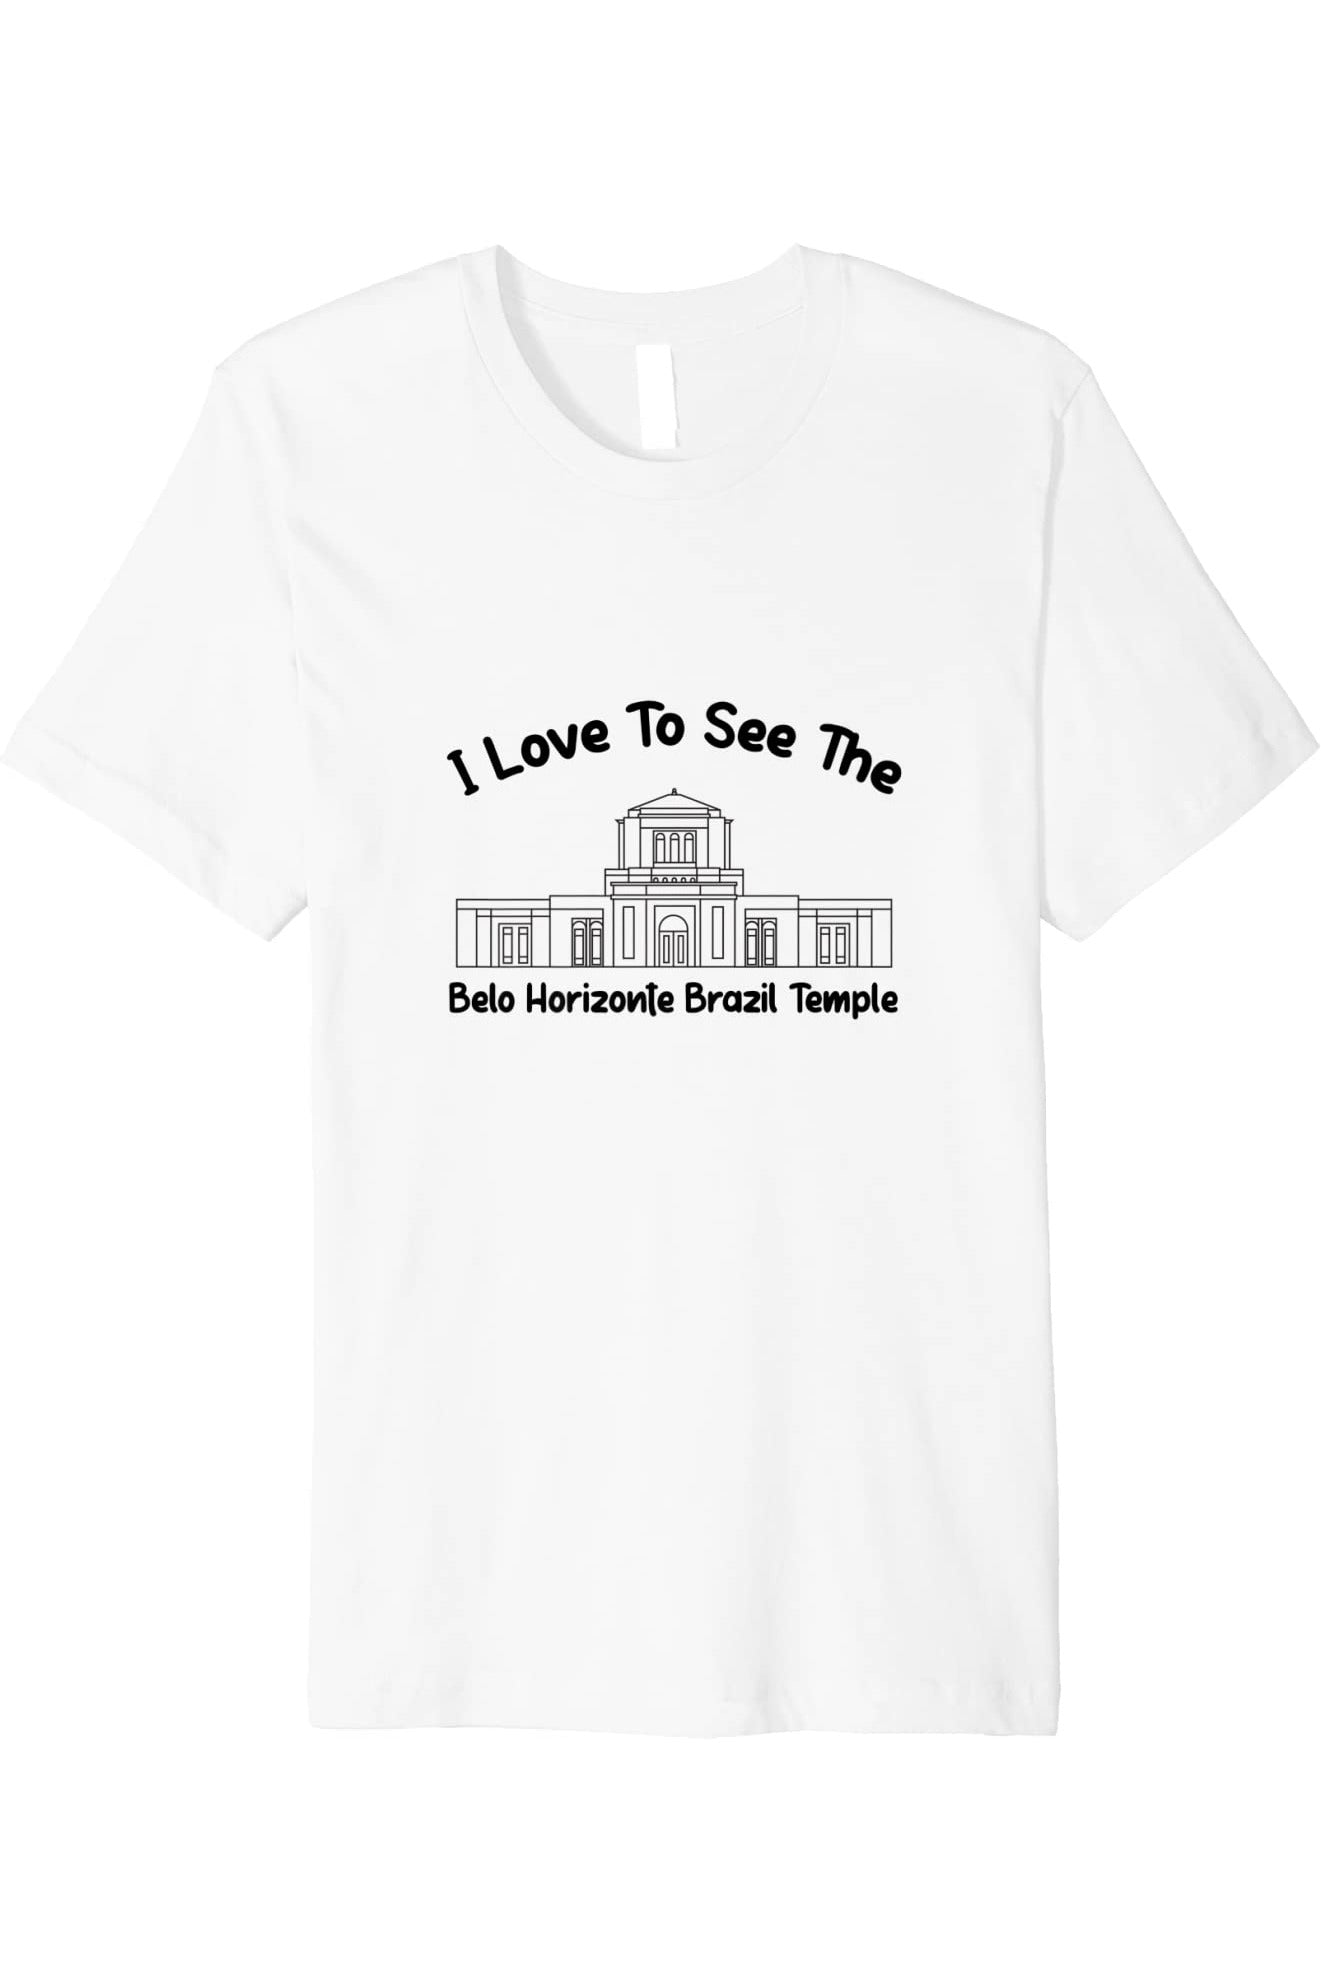 Belo Horizonte Brazil Temple T-Shirt - Premium - Primary Style (English) US